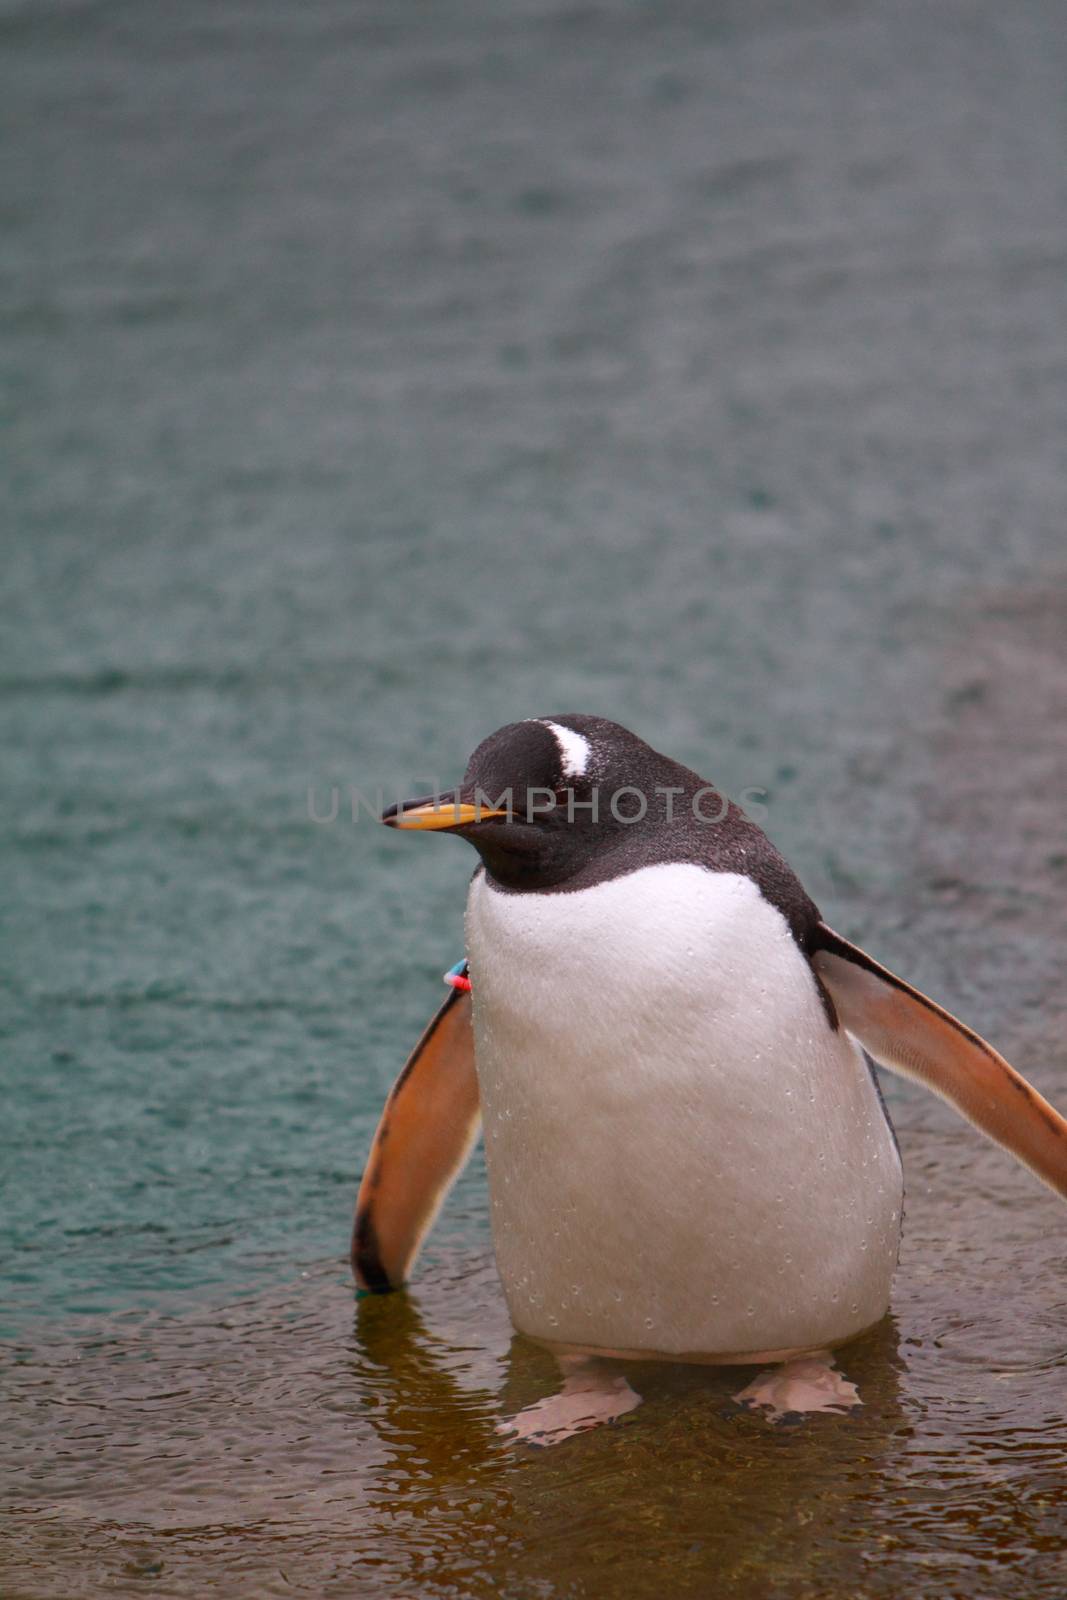 Gentoo penguin by mitzy